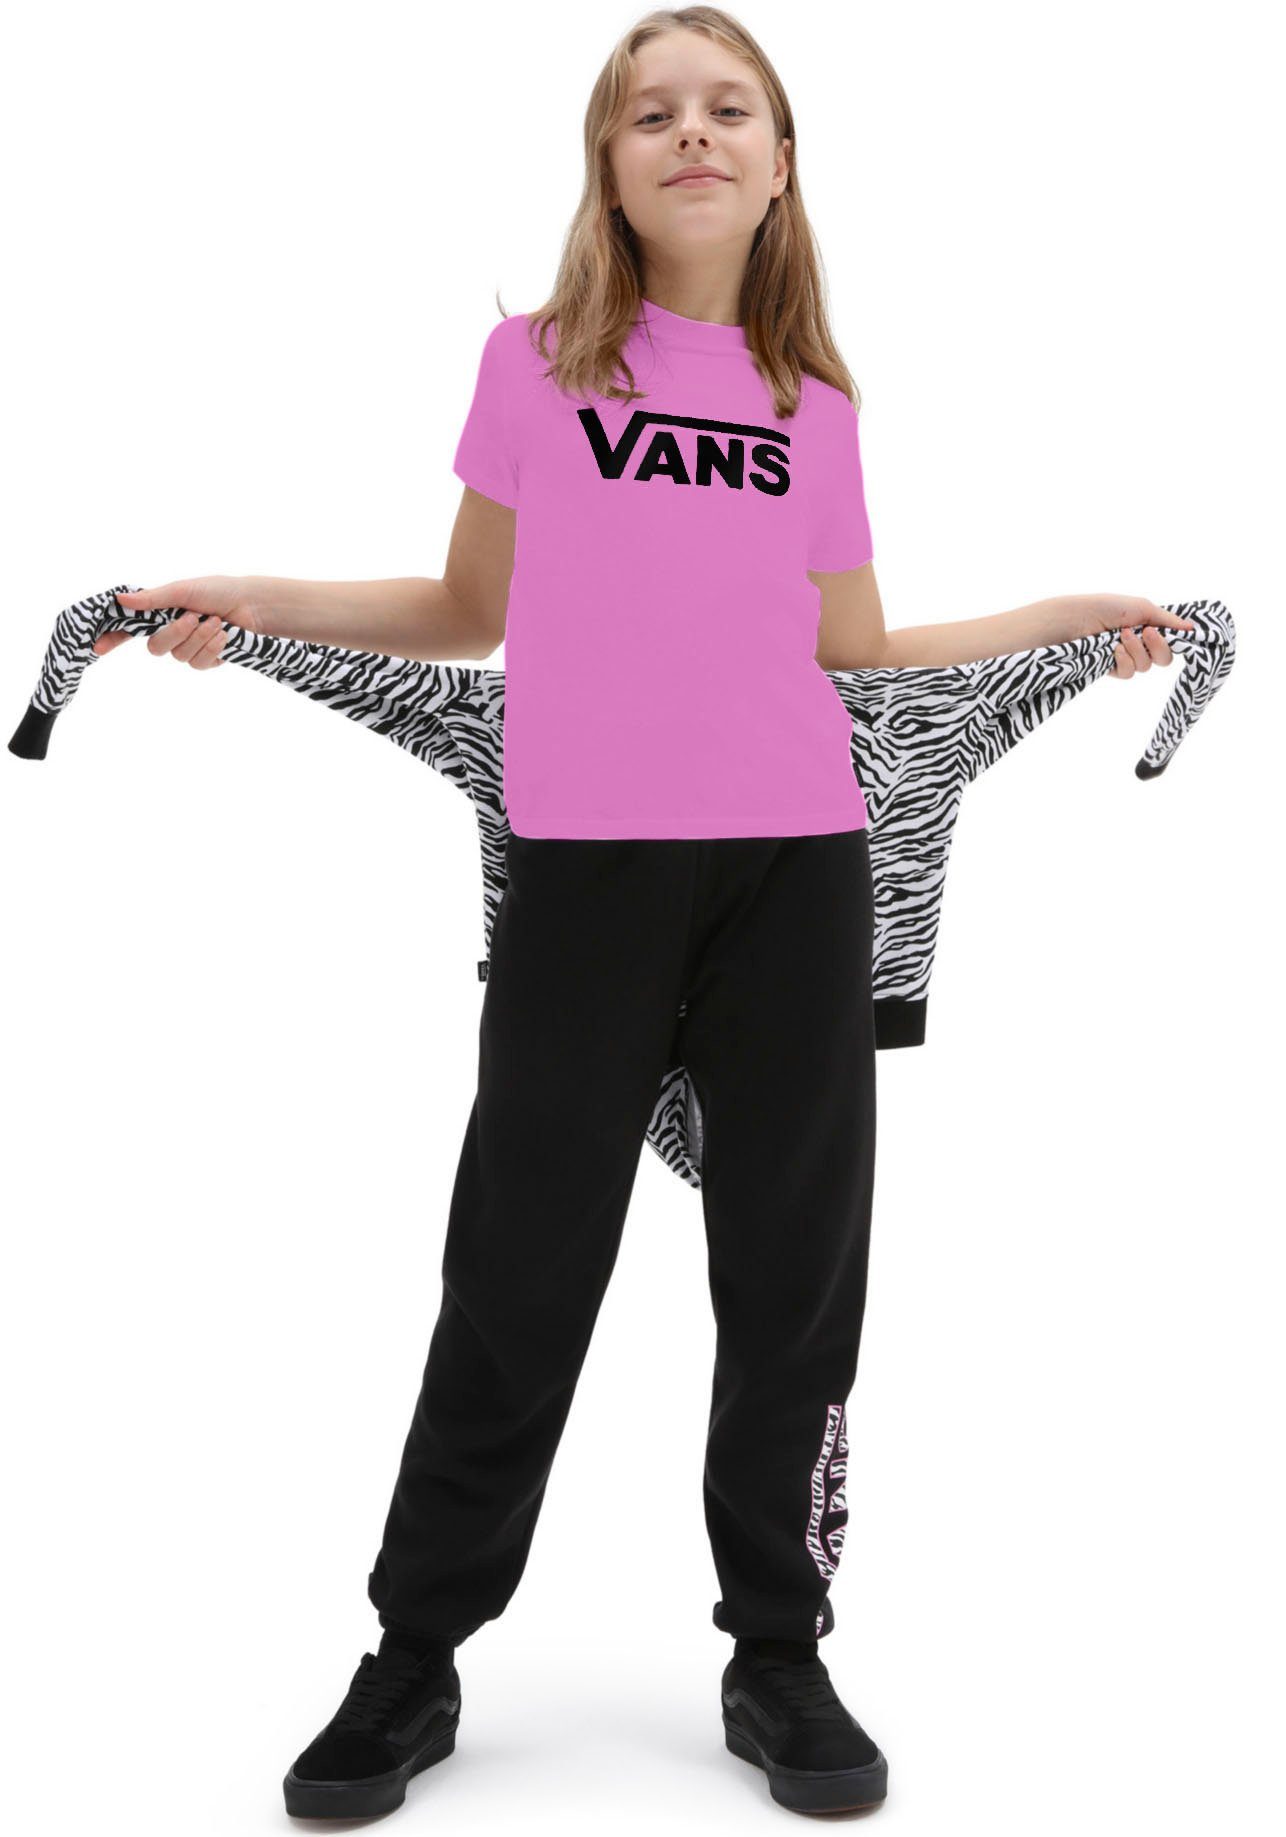 FLYING cyclamen V Vans GIRLS GR CREW T-Shirt